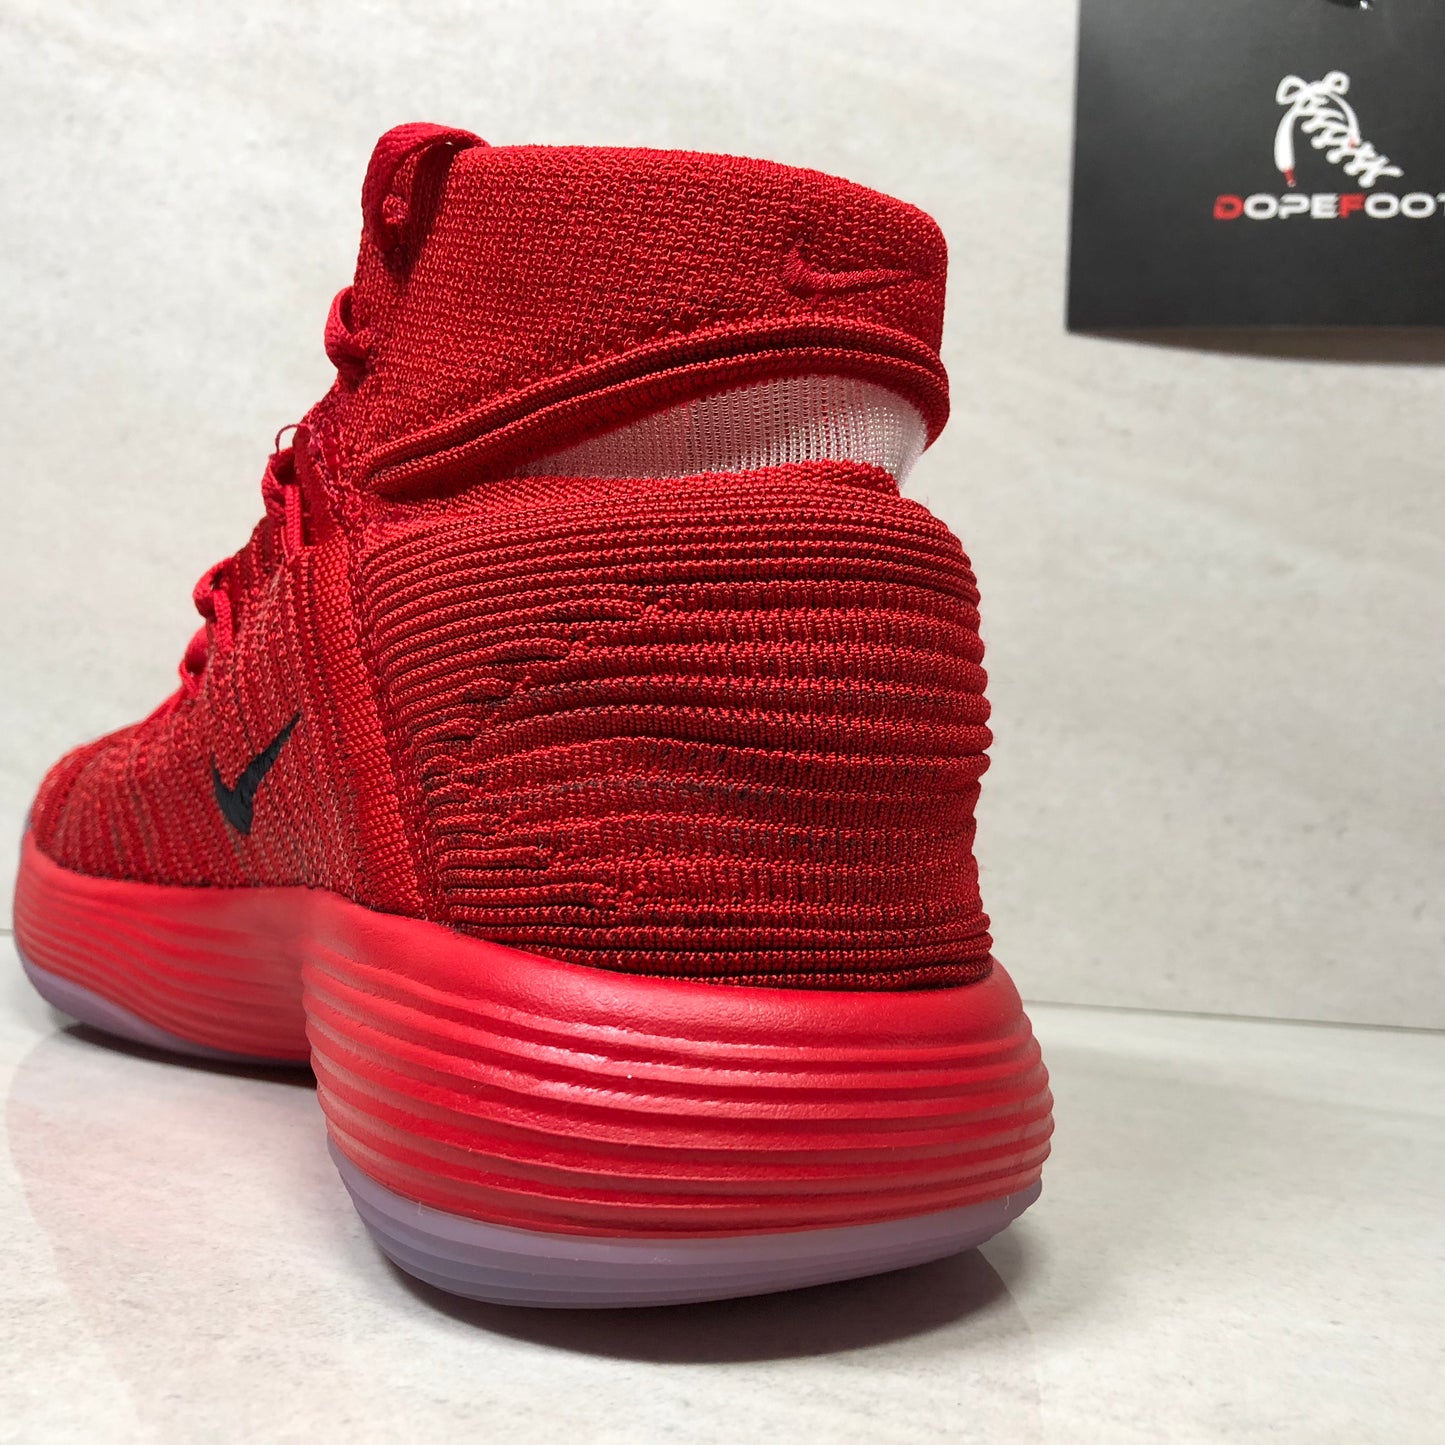 Nike Basketball Hyperdunk 2017 - 897636 600 - Homme Taille 11 - Rouge/Noir